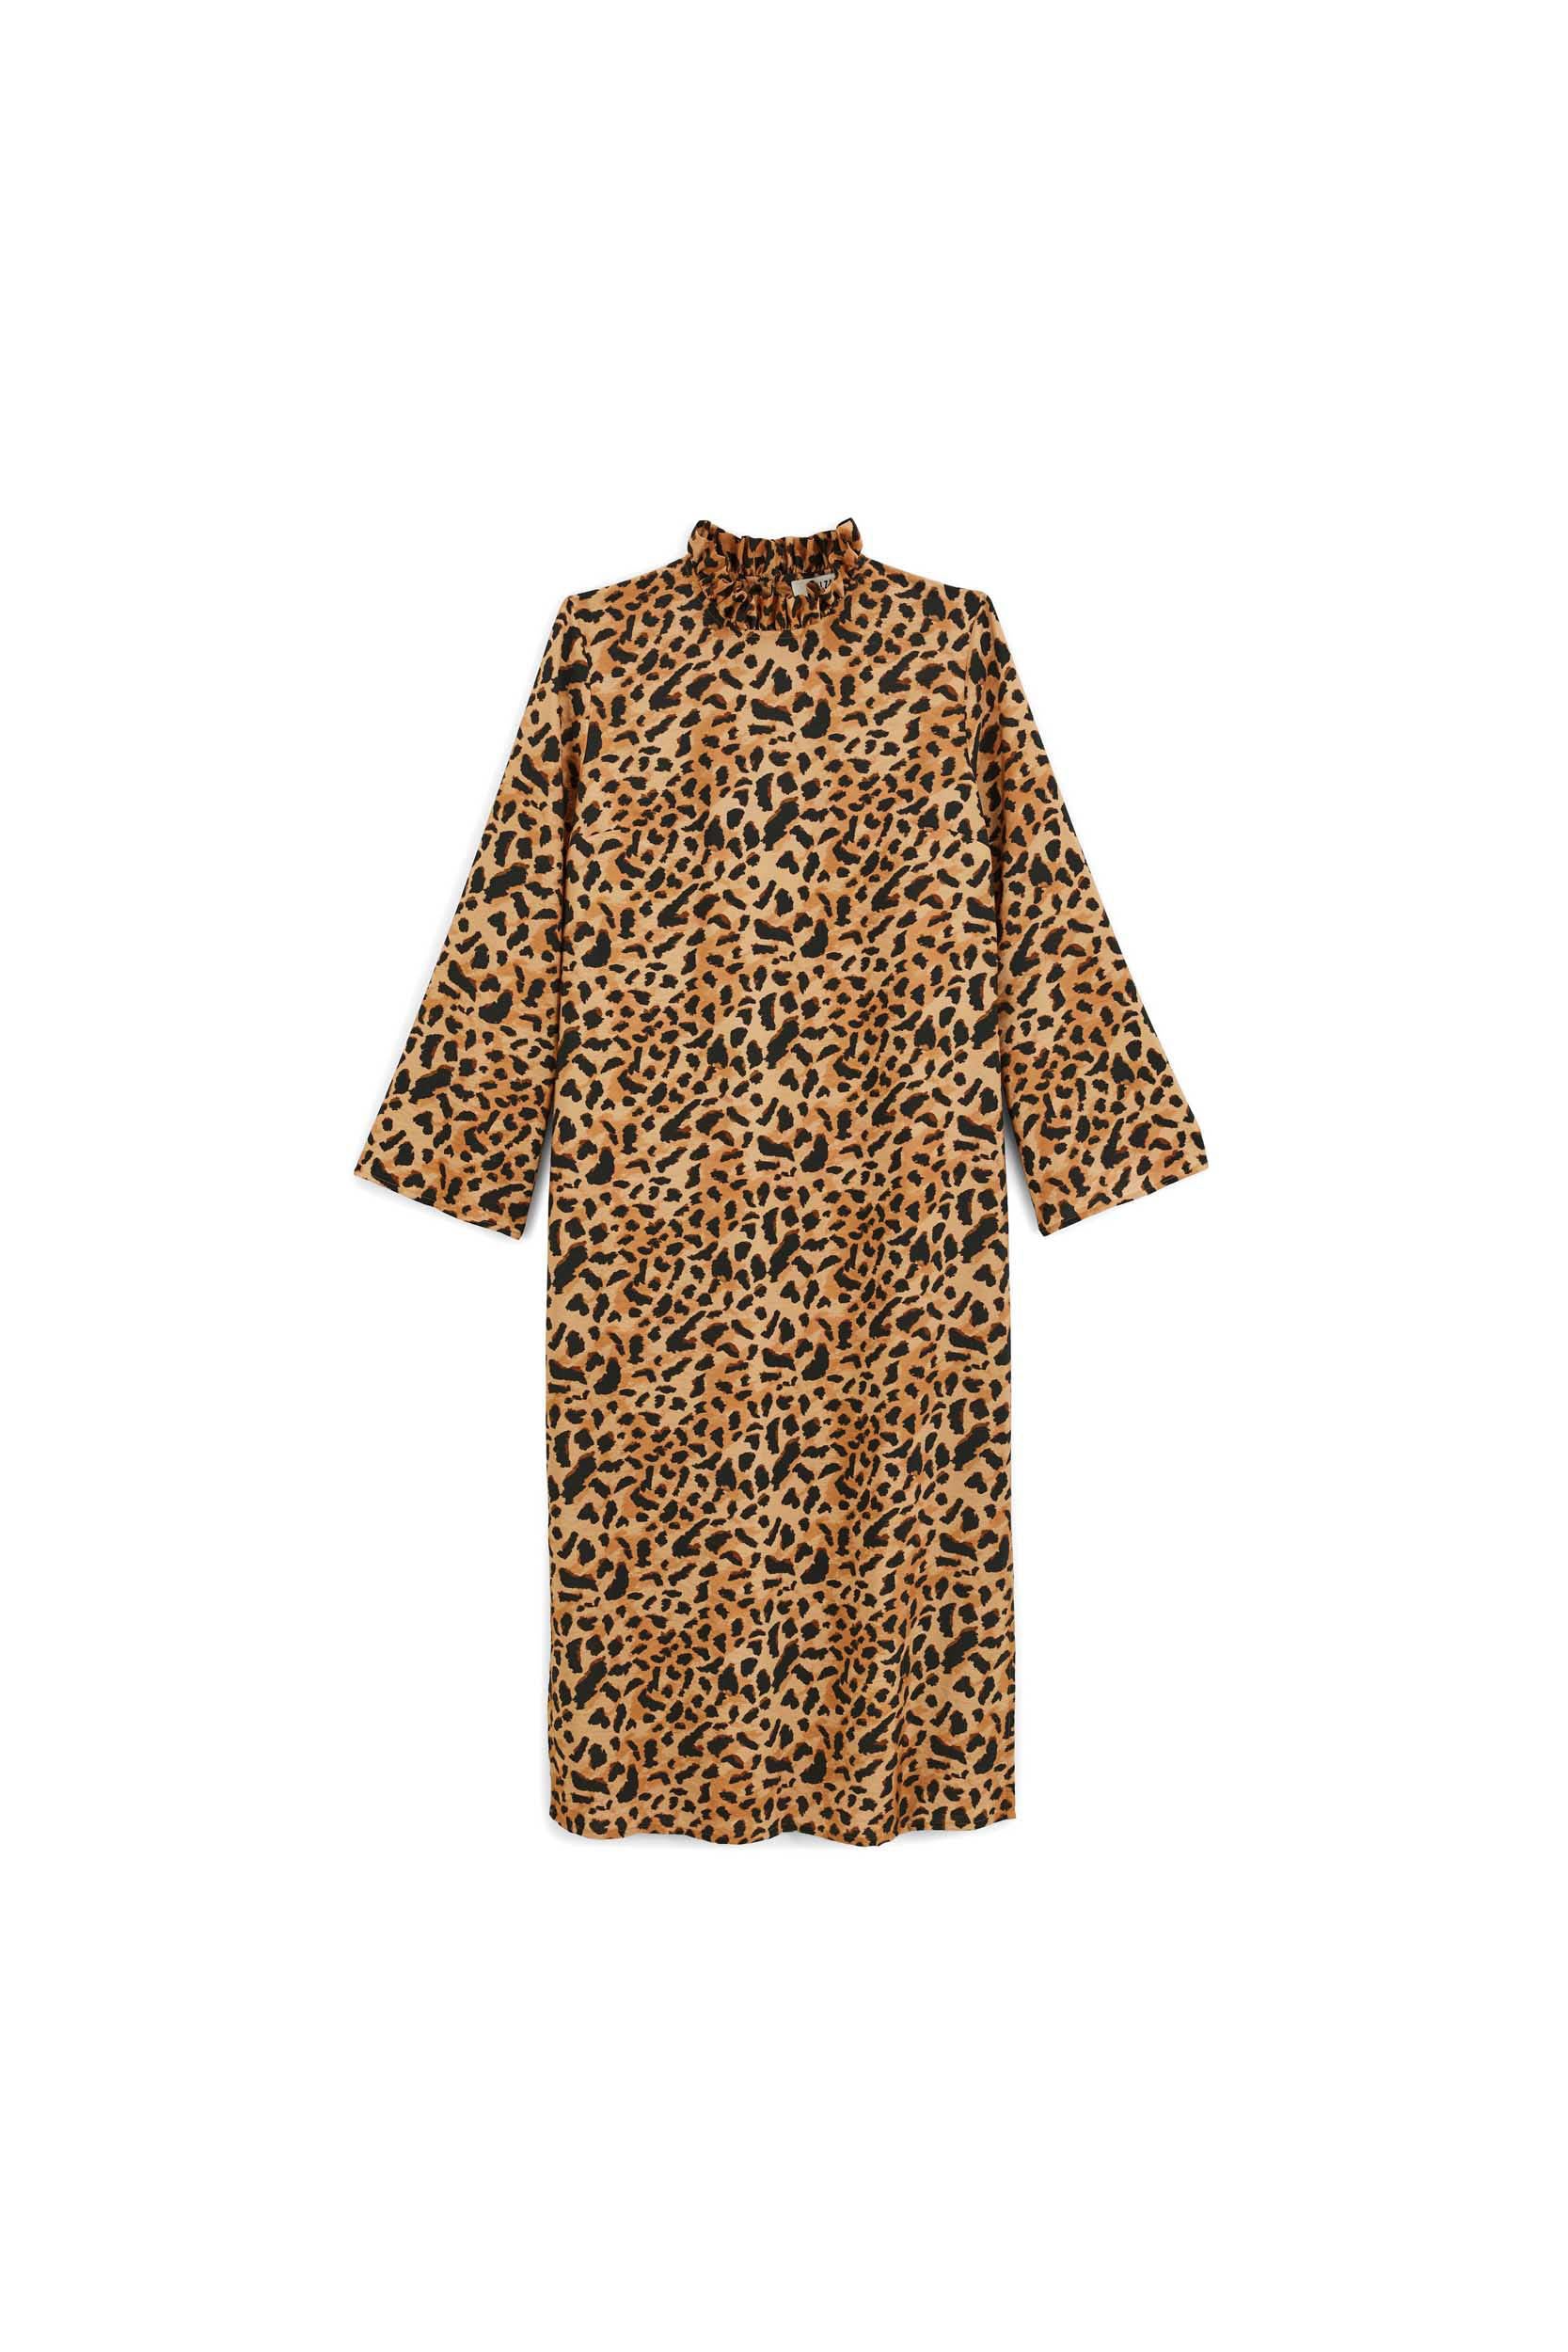 Nugget cheetah cappuccino dress